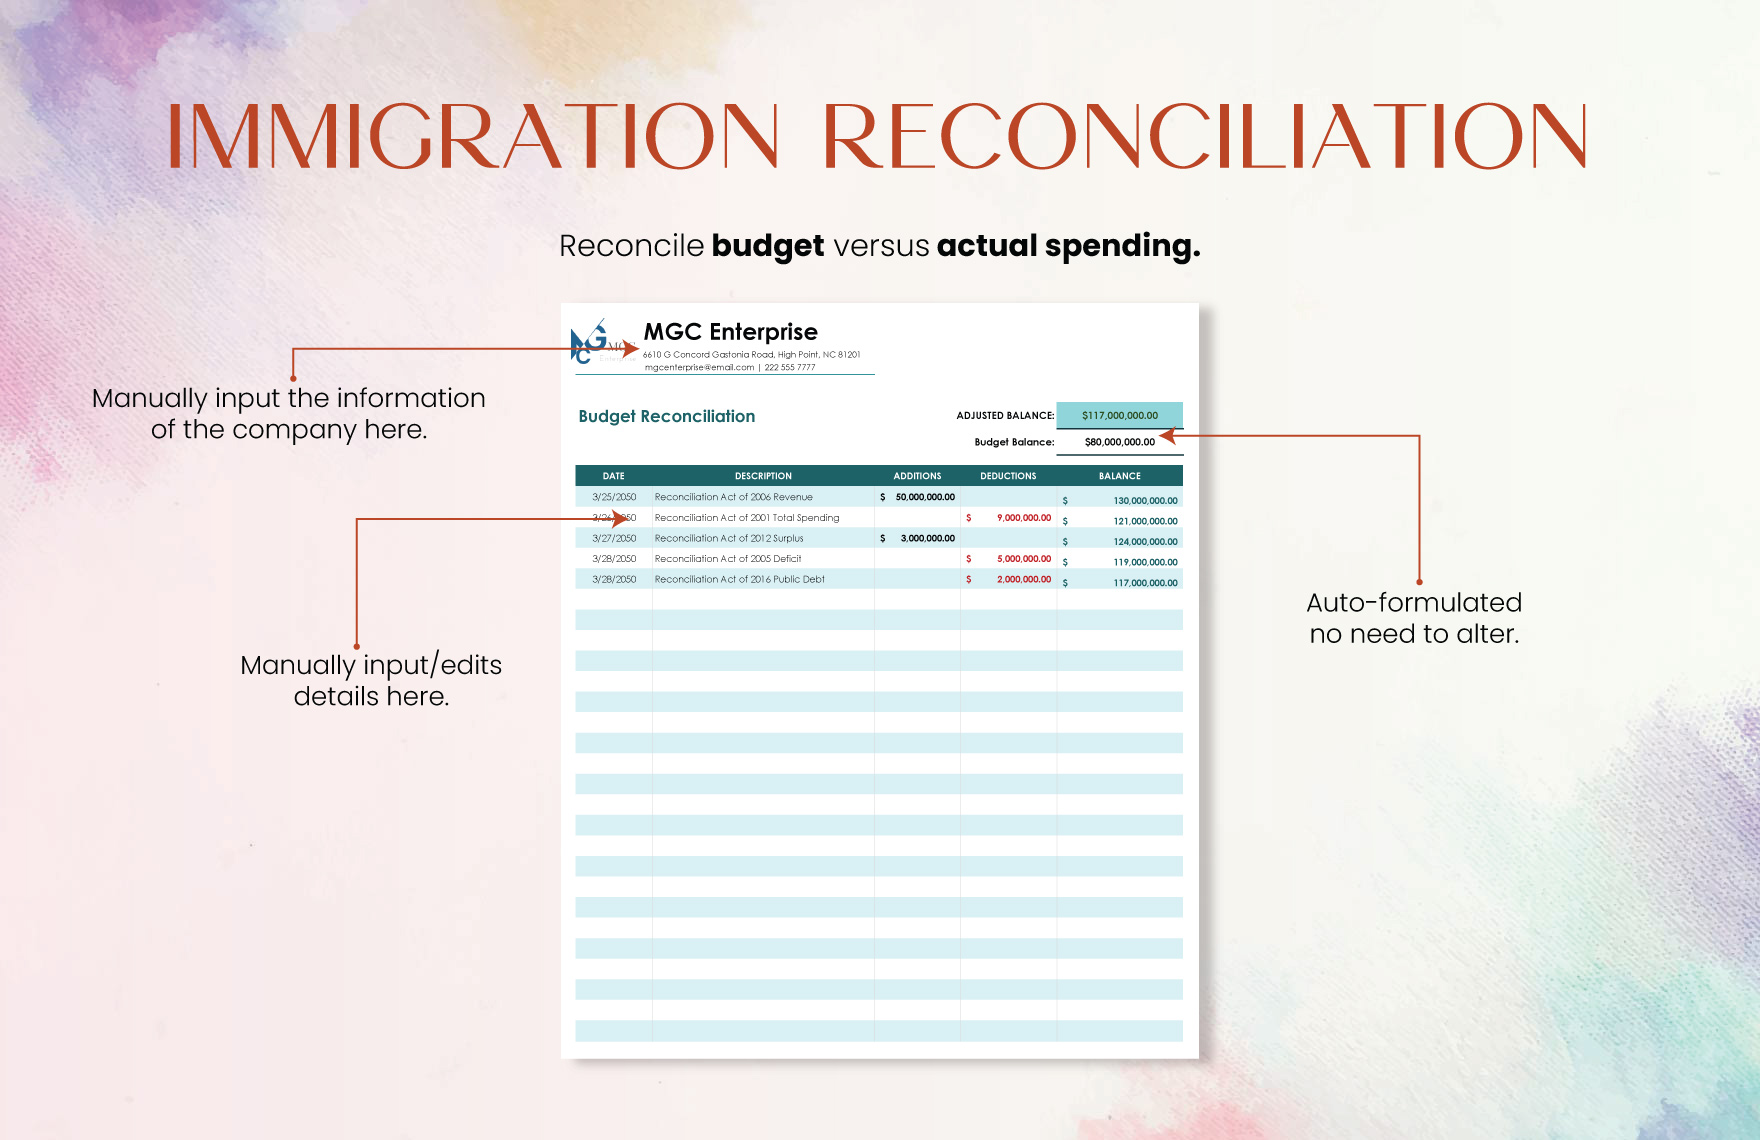 Budget Reconciliation Template